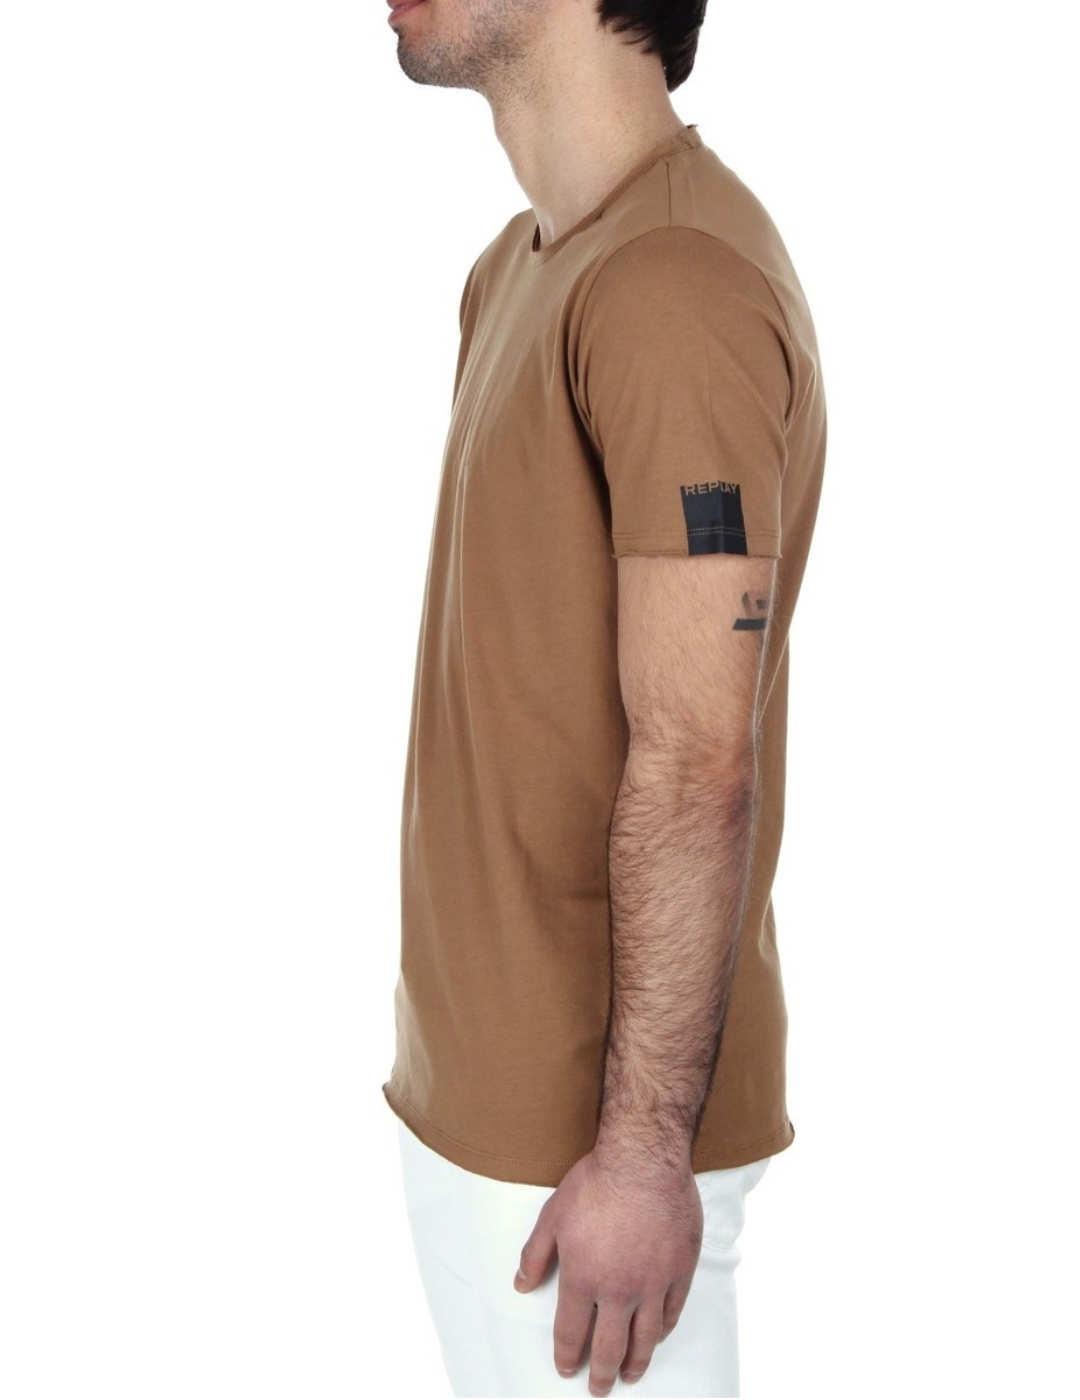 Camiseta Replay de manga corta marrón de hombre